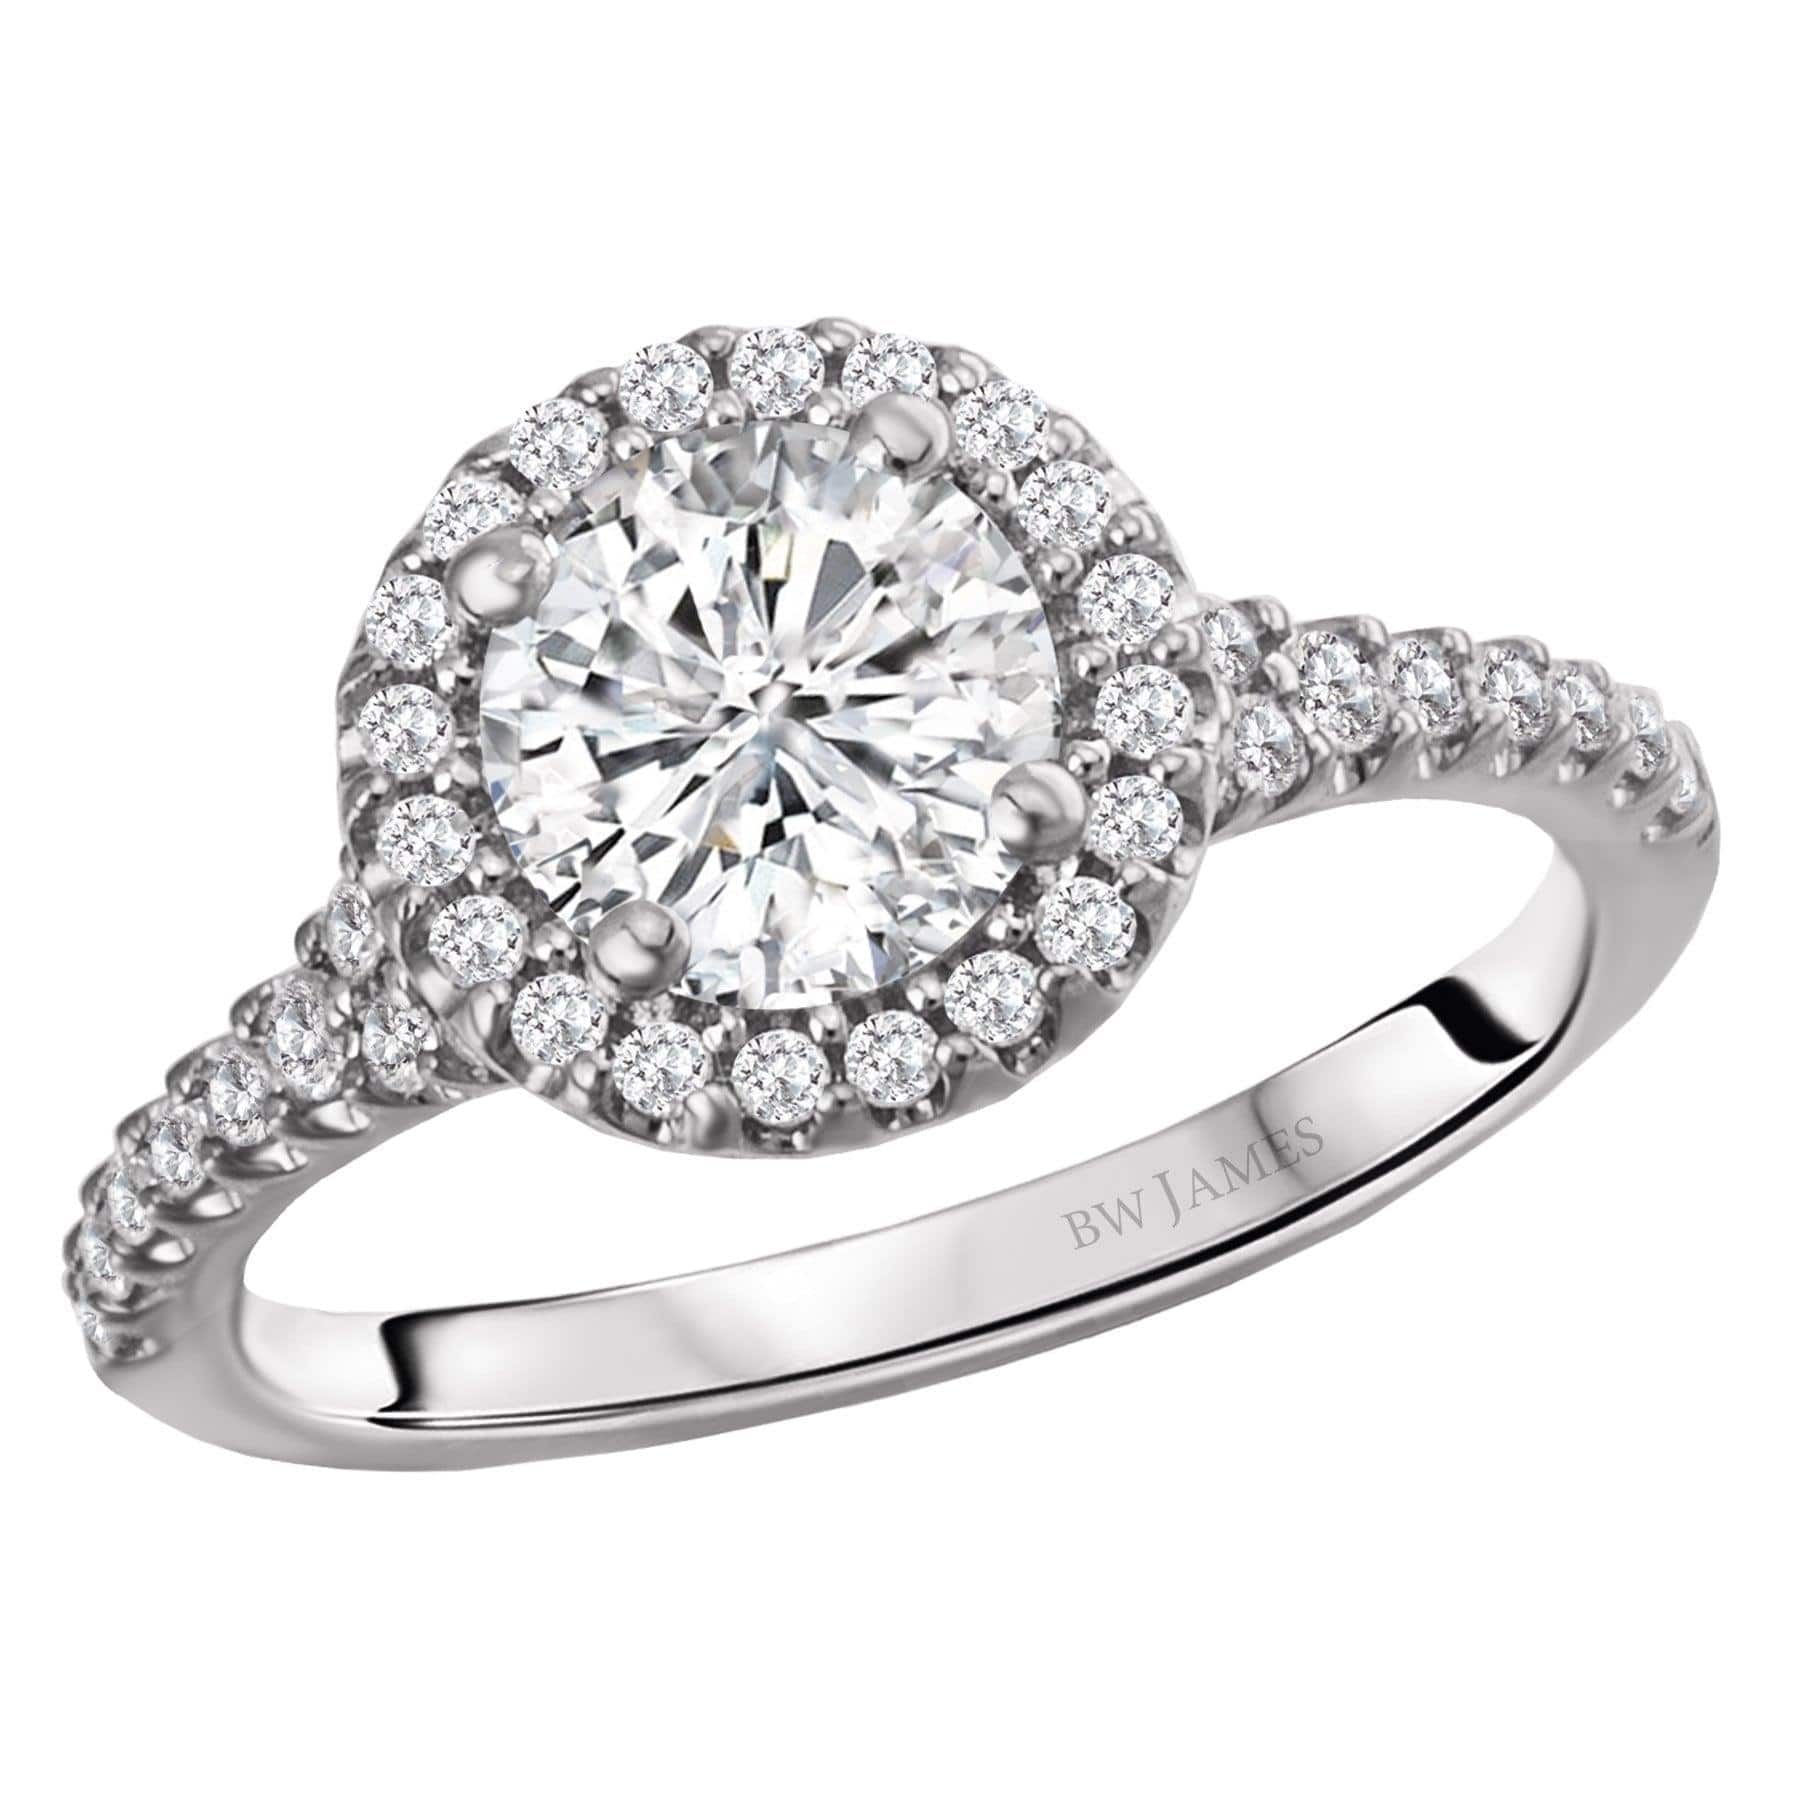 BW JAMES Engagement Rings " The Sierra" Halo Diamond Ring